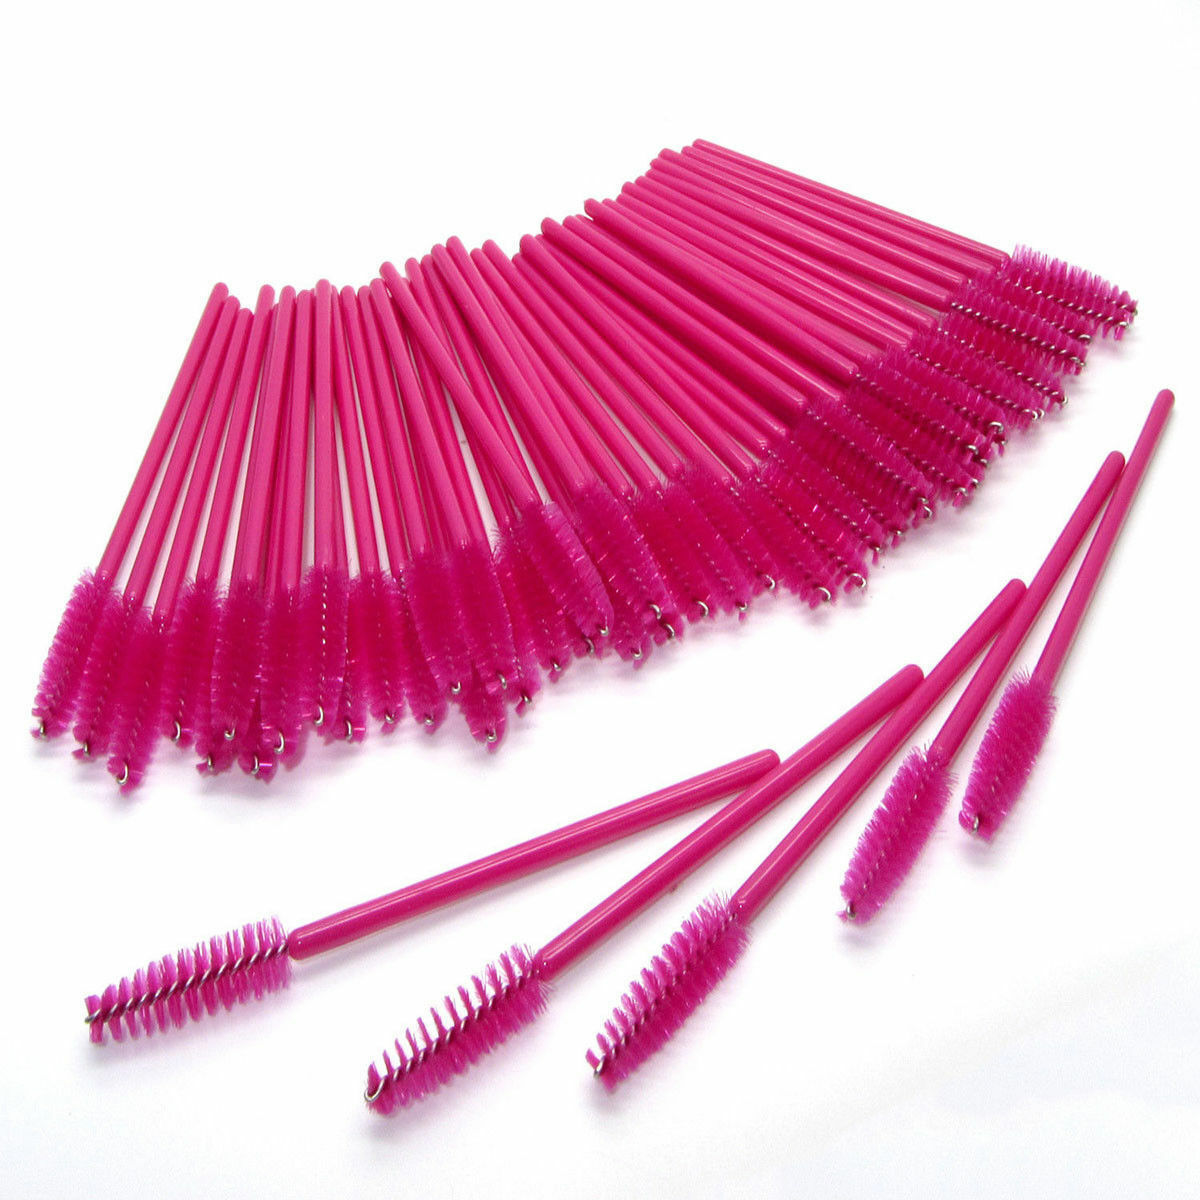 100PCS Hot Pink Disposable Mascara Wands Eyelash Brushes Brow Lash Extension Spoolie Applicator